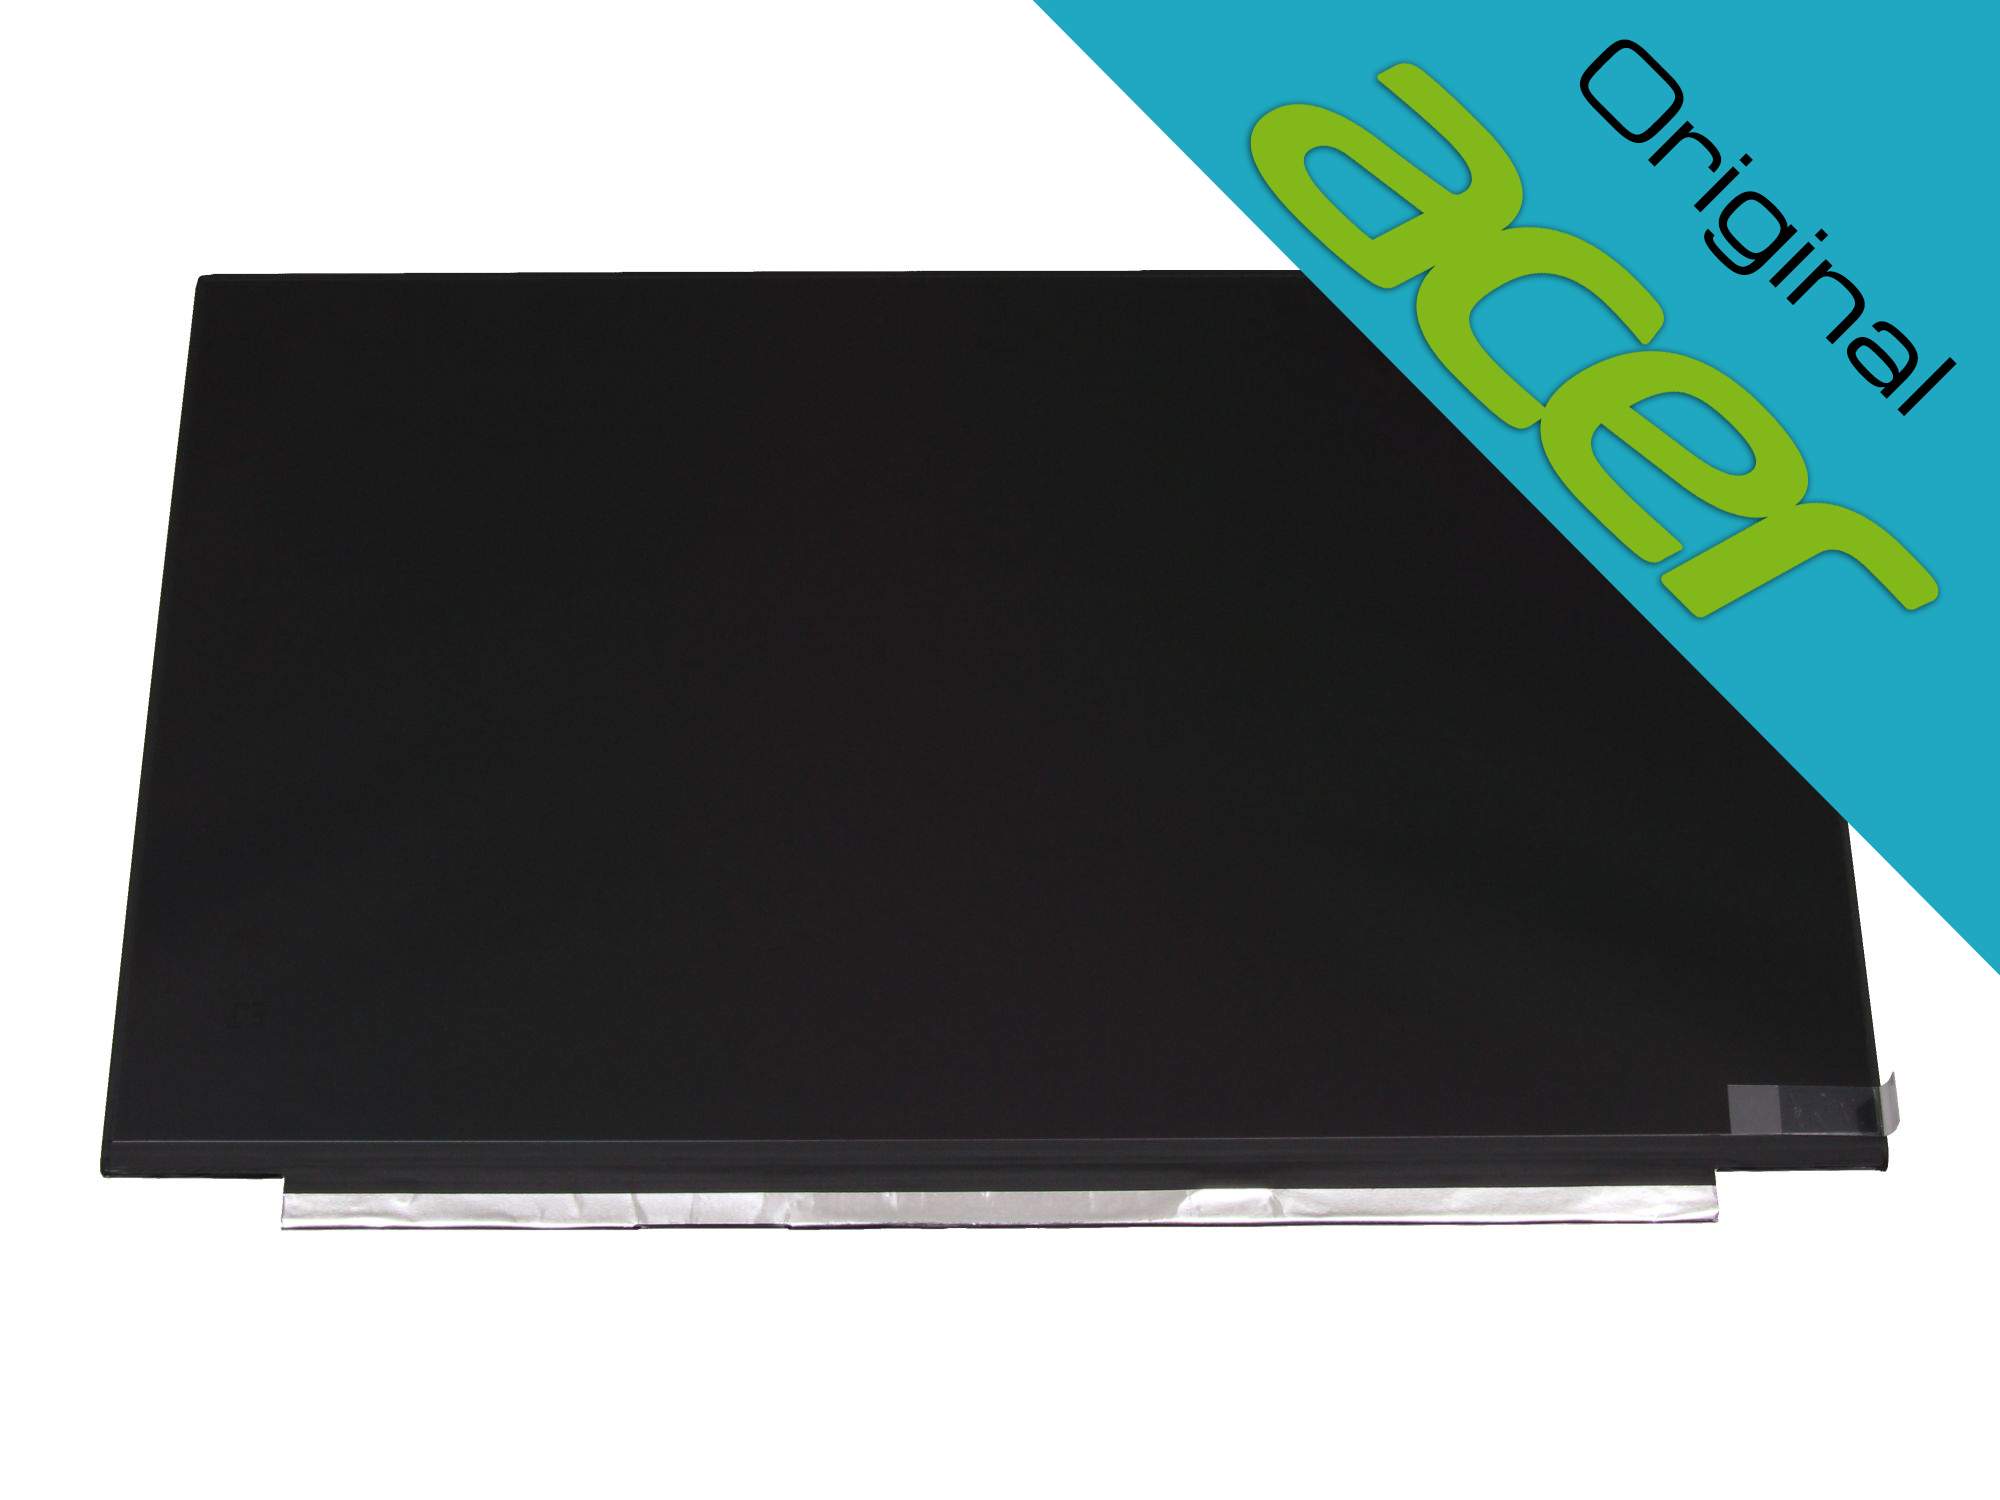 ACER LCD PANEL 15 6'W FHD NON-GLARE